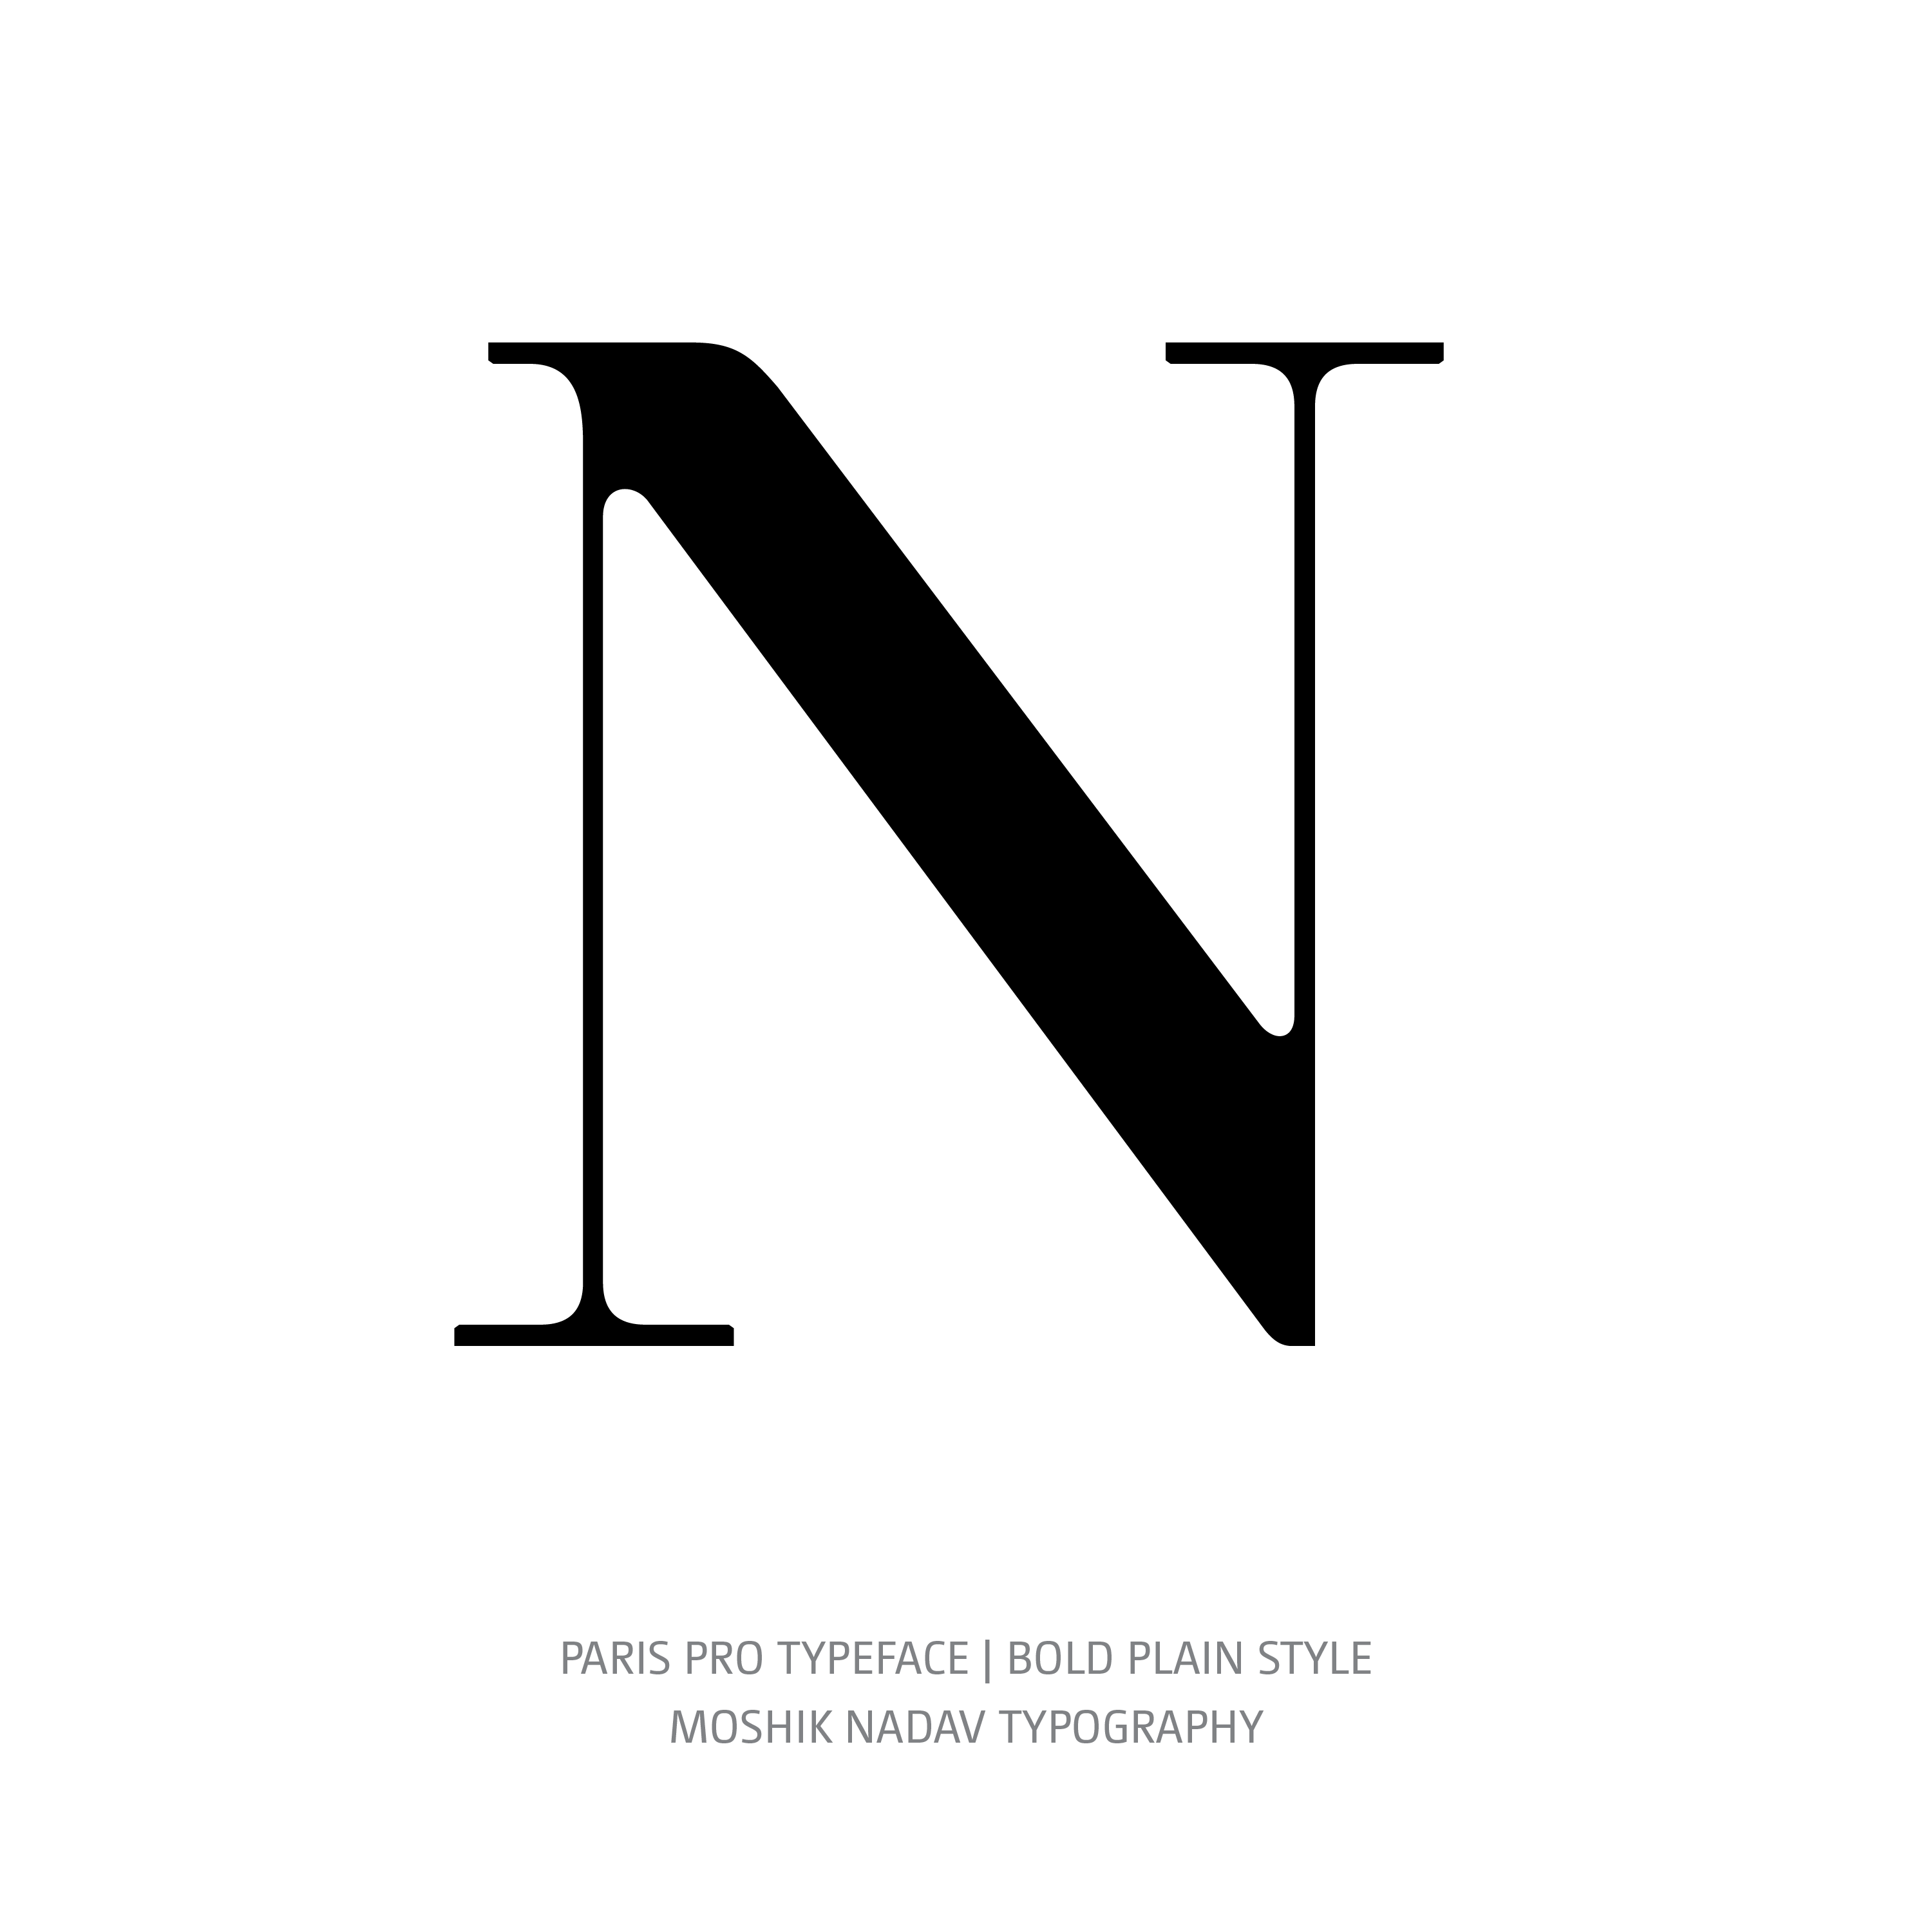 Paris Pro Typeface Regular Bold N